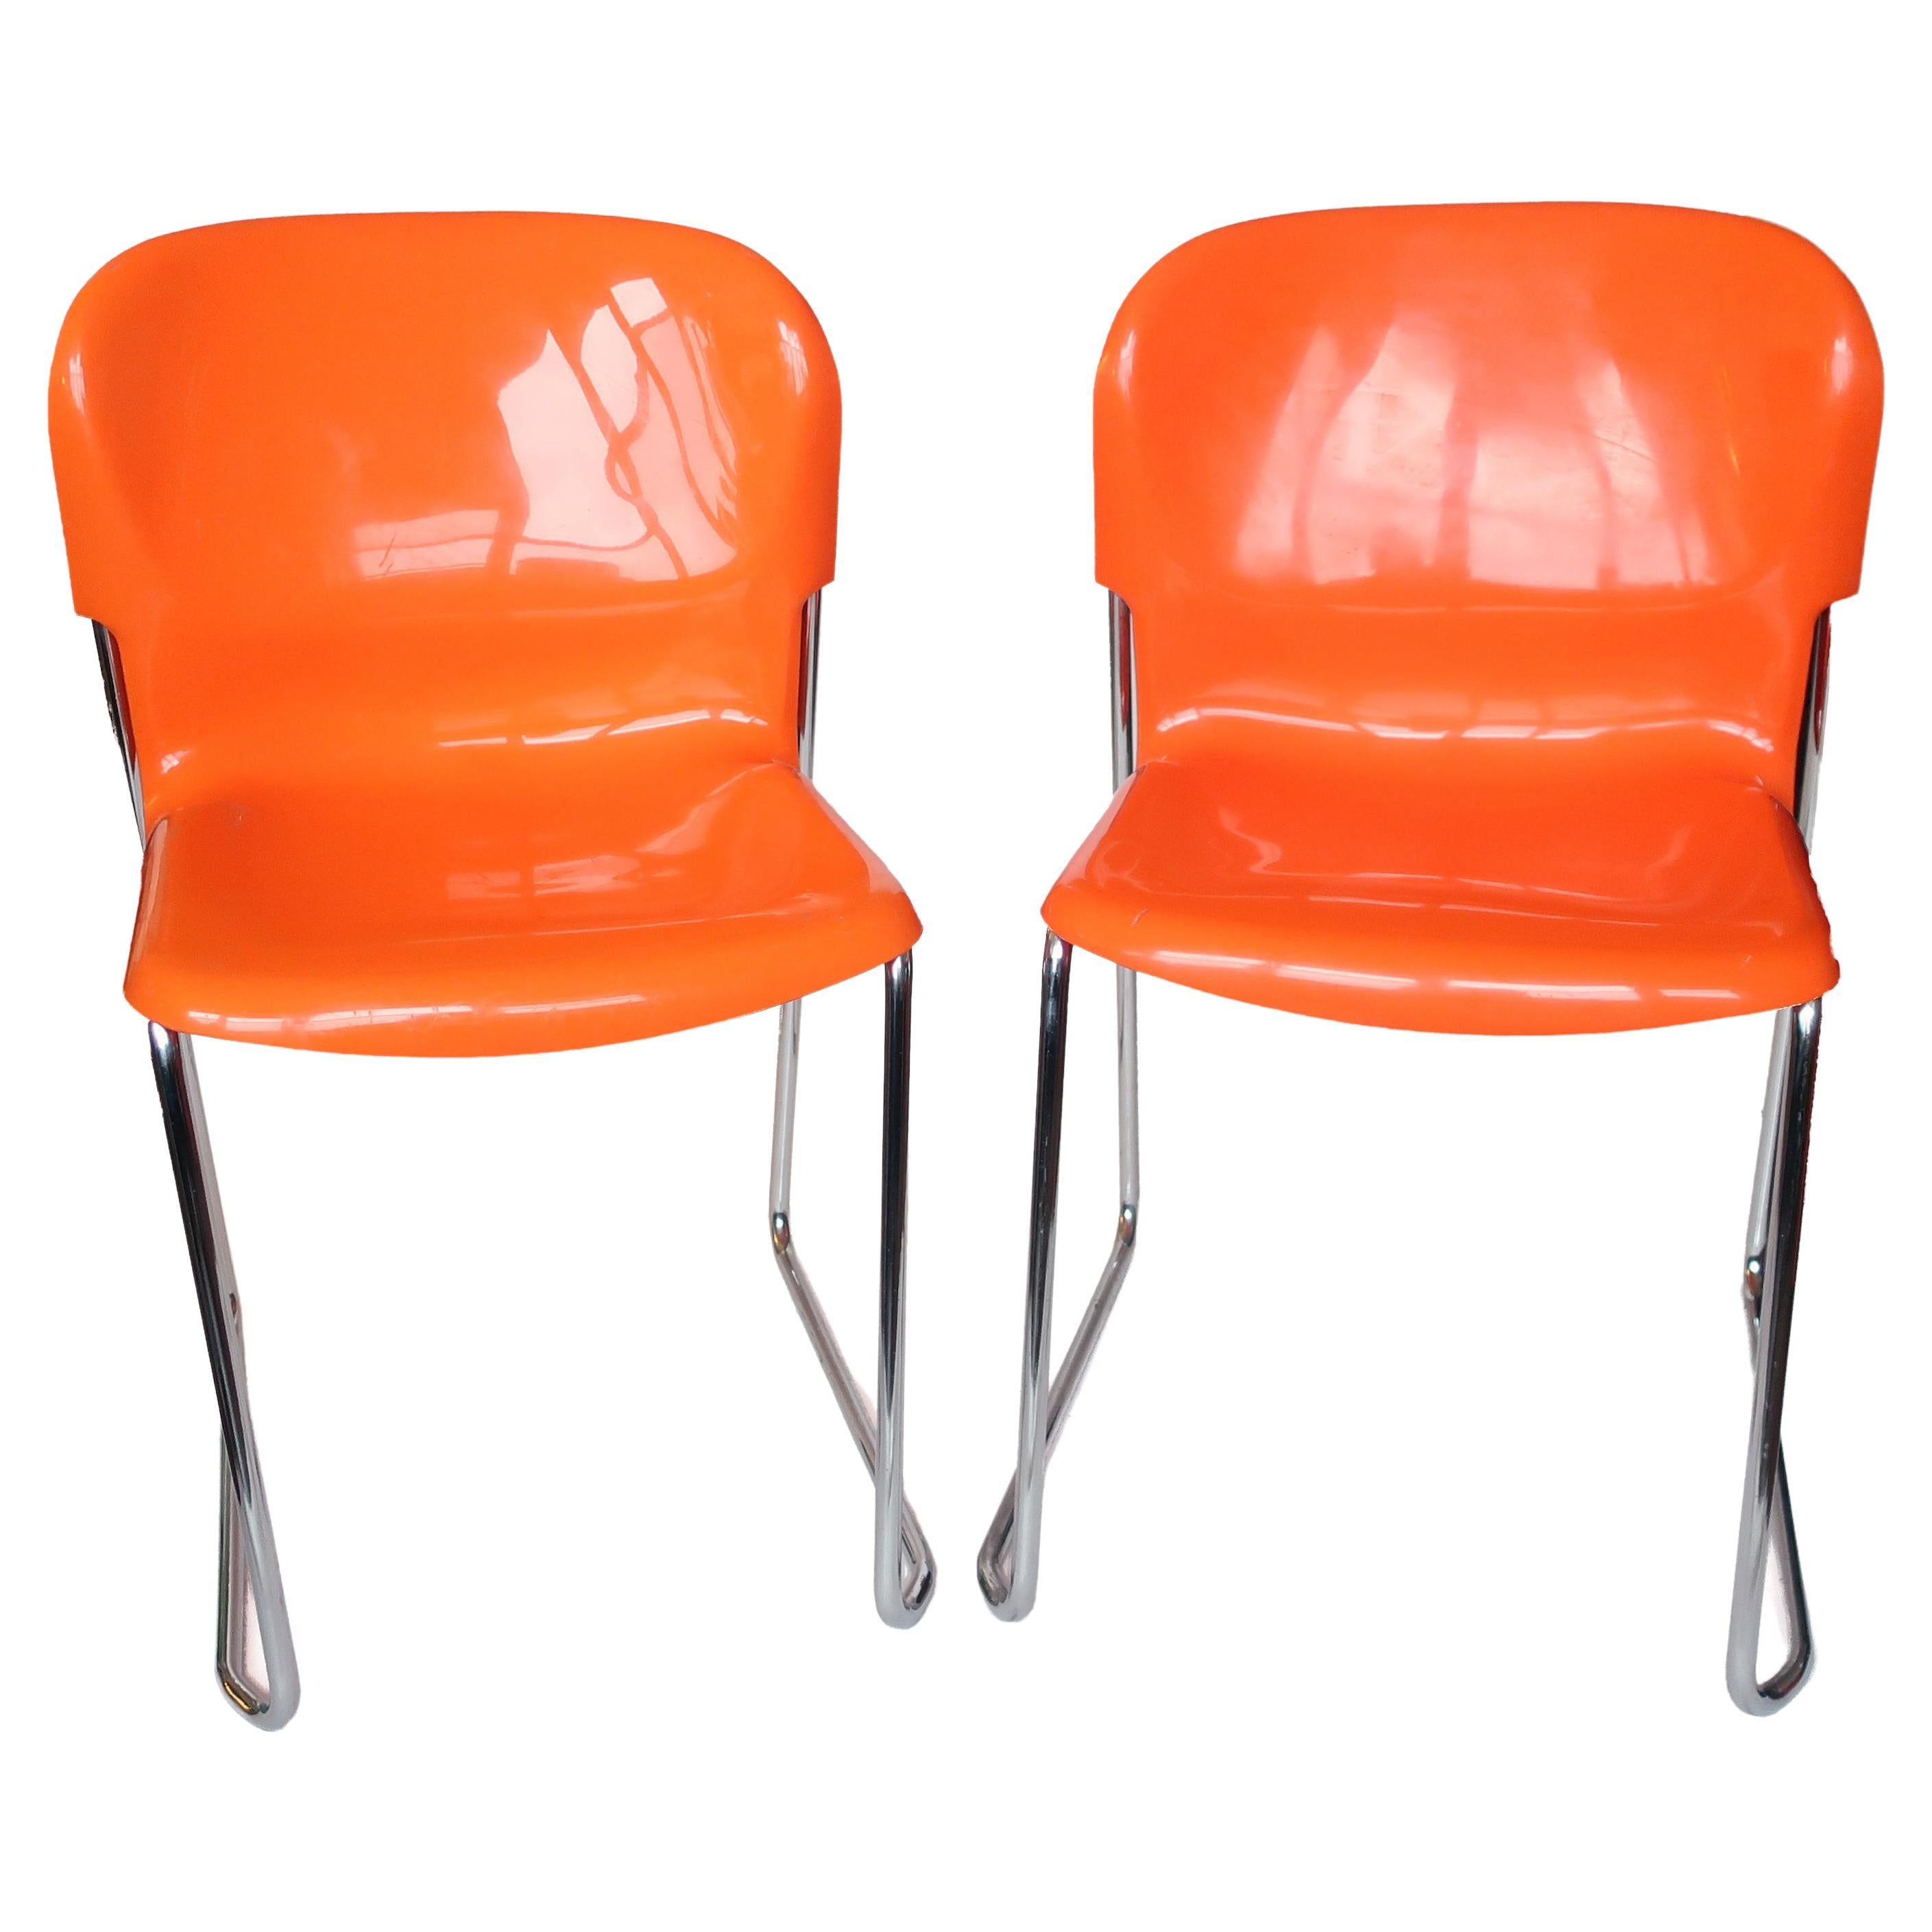 Drabert Side Chairs